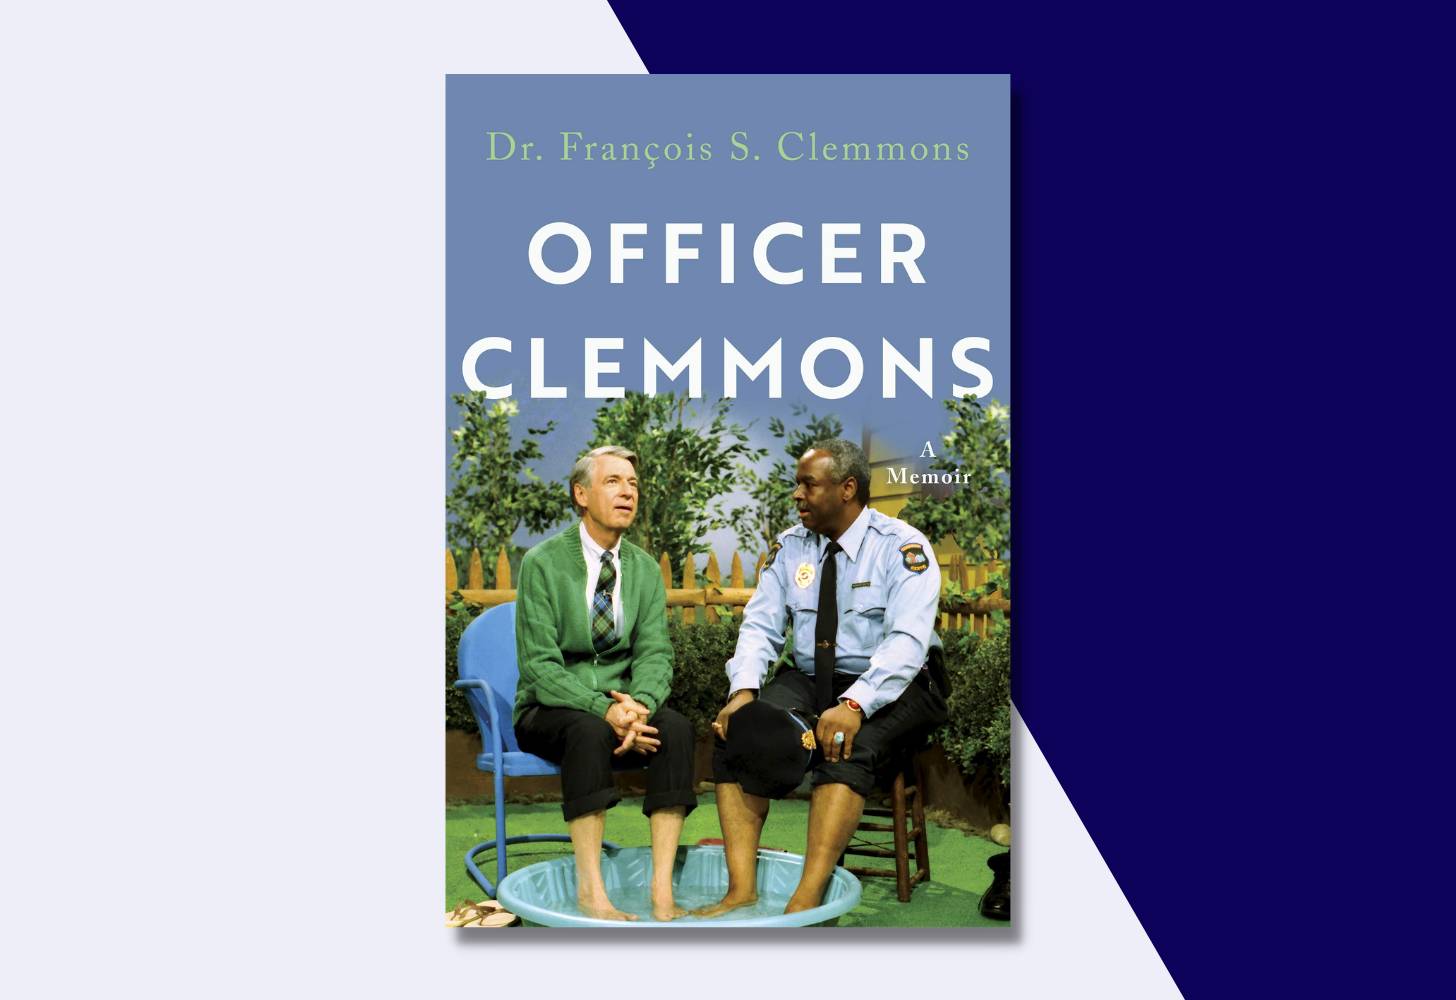 “Officer Clemmons: A Memoir” by Dr. François S. Clemmons